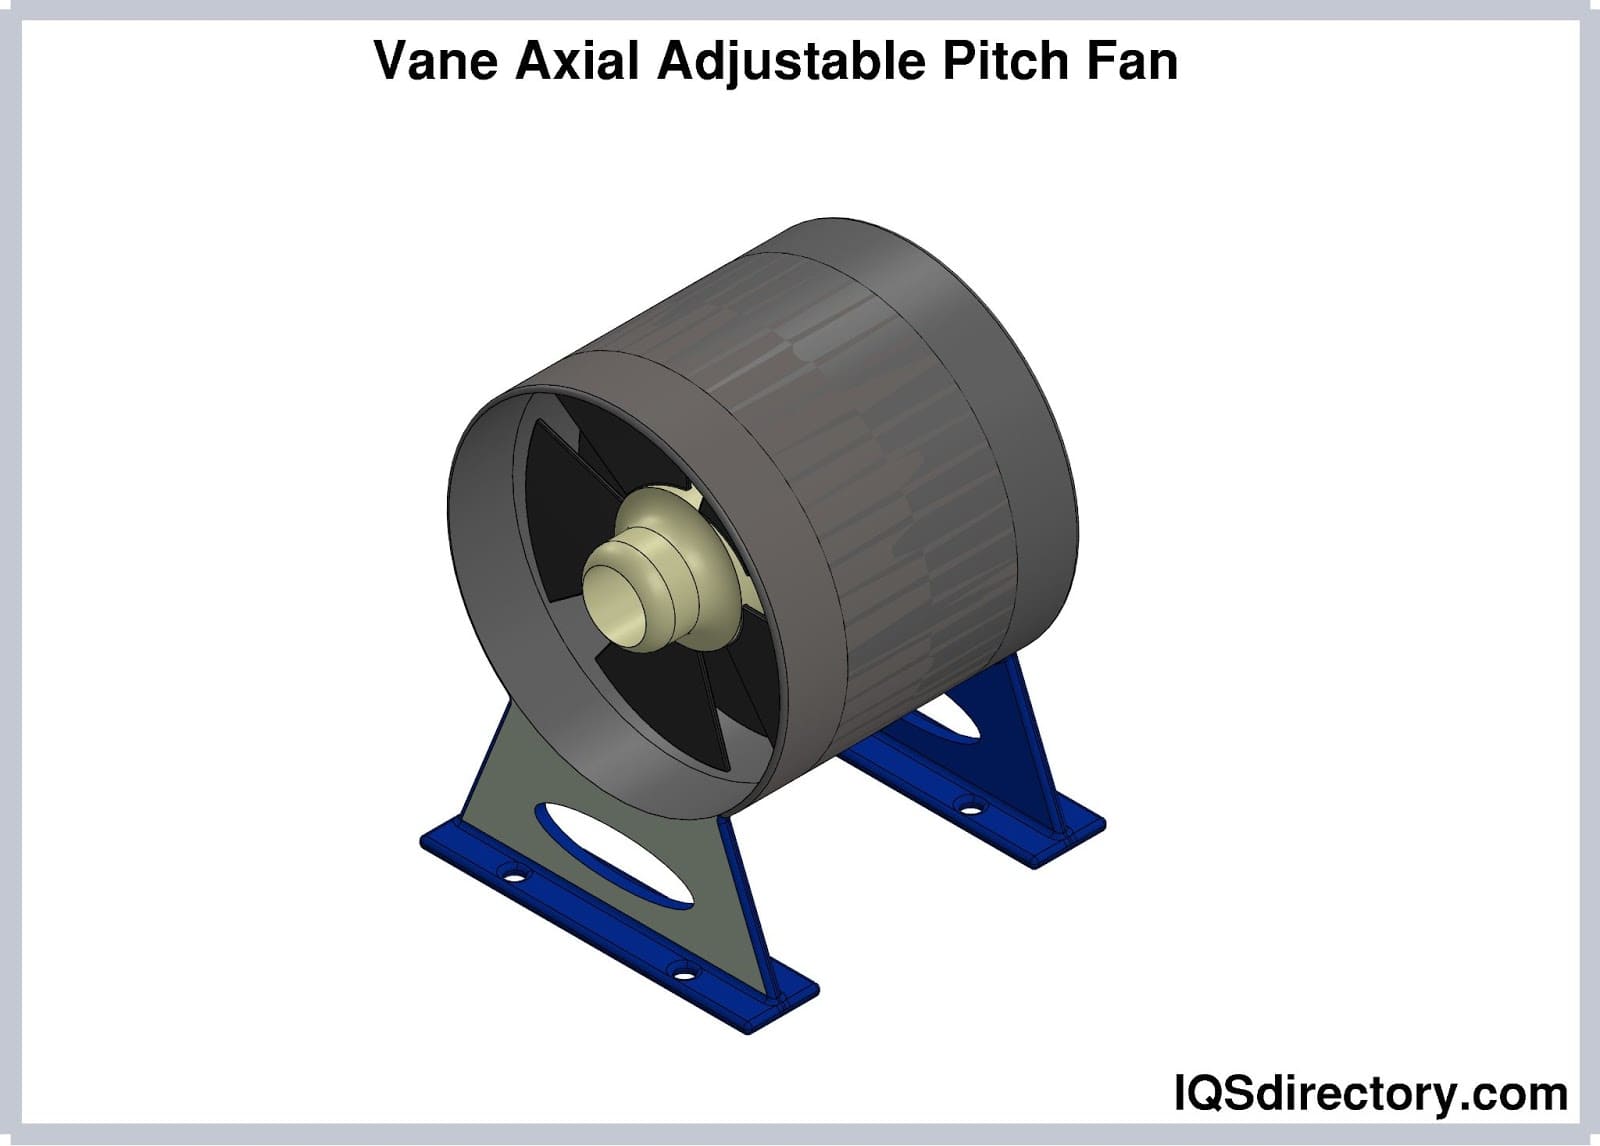 Vane Axial Adjustable Pitch Fan